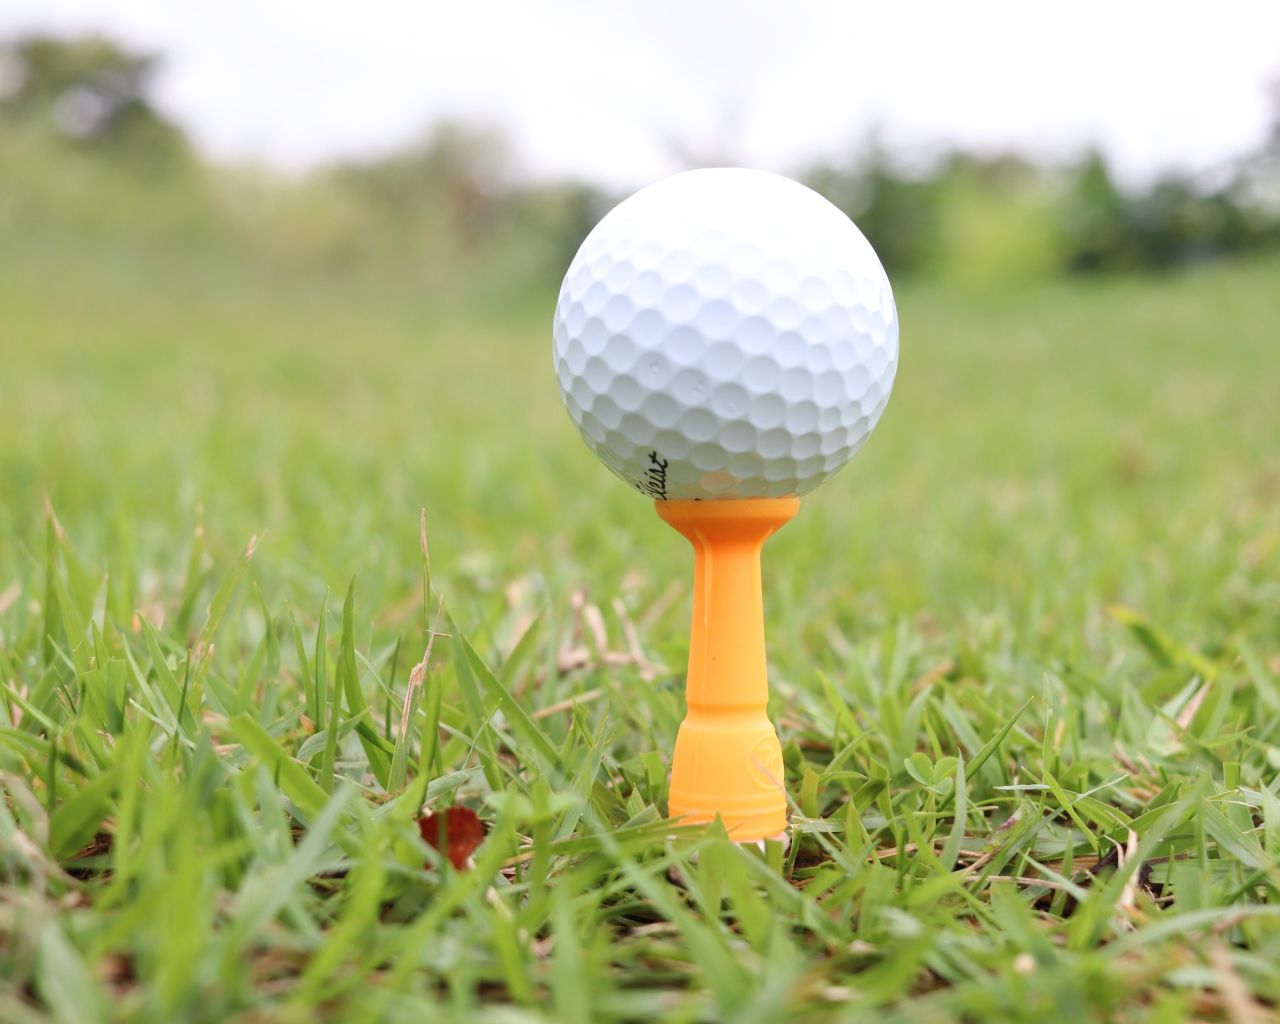 Golf ball on a field with green grass